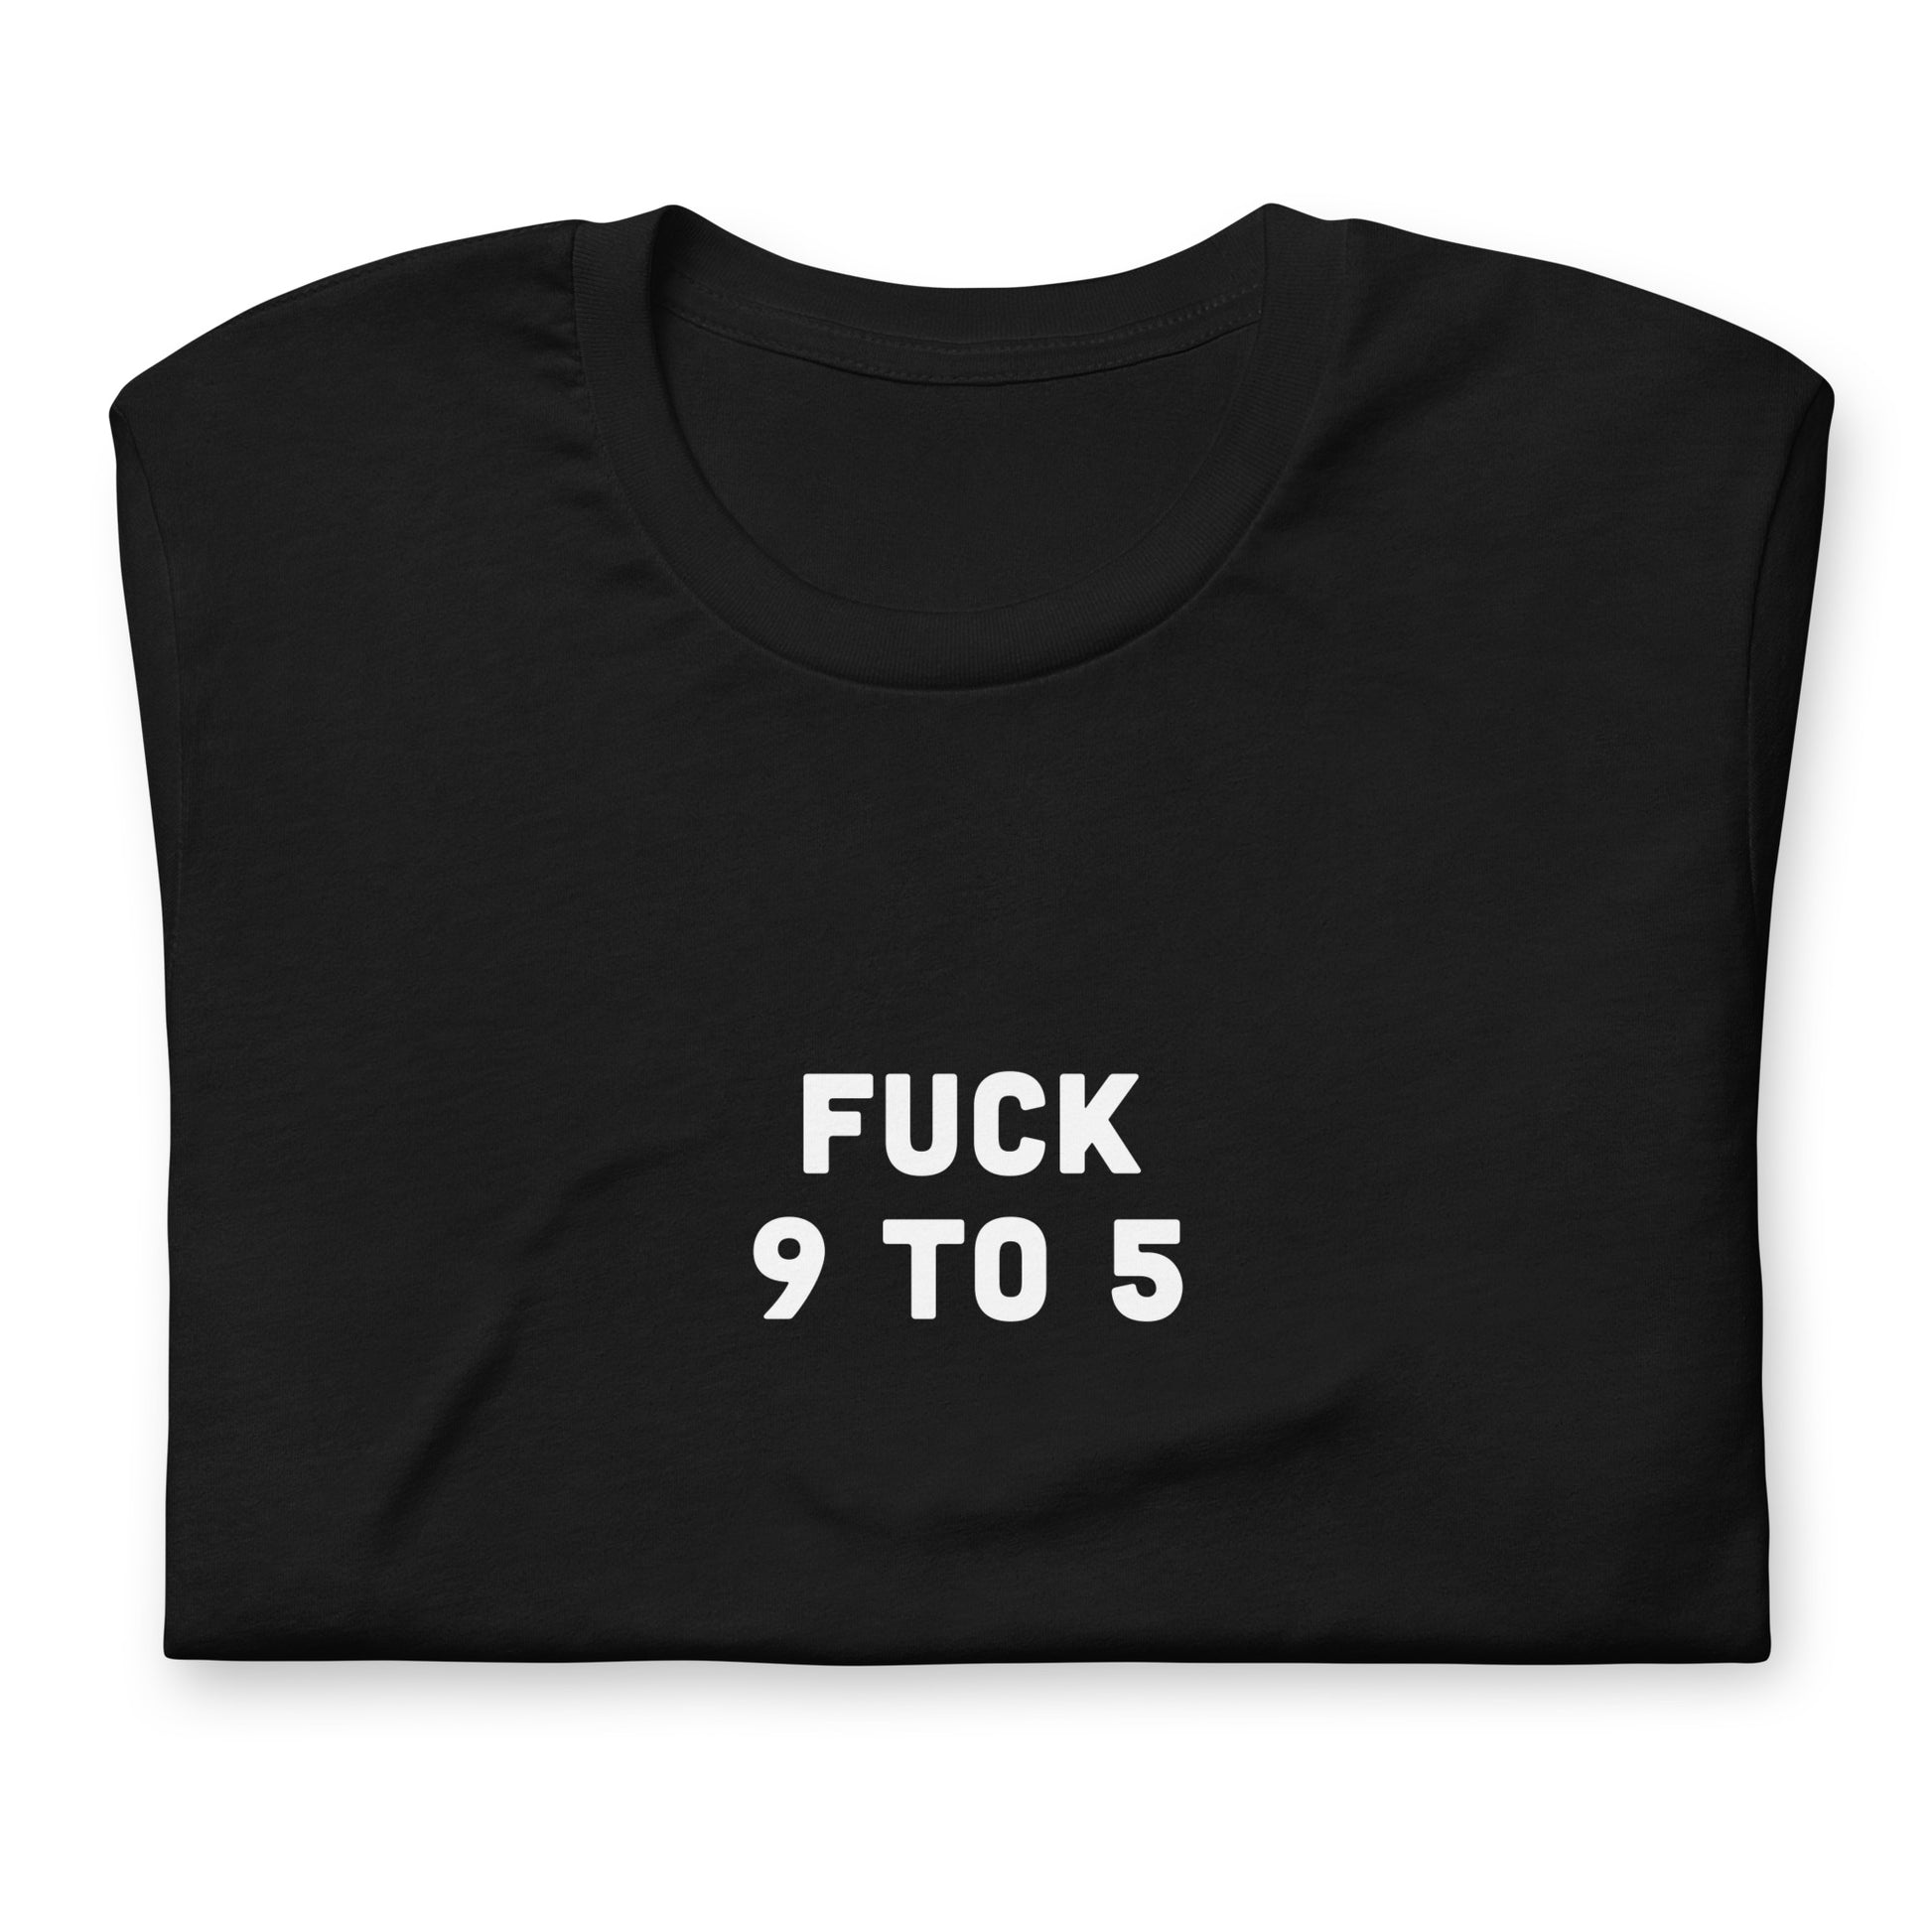 Fuck 9 To 5 T-Shirt Size M Color Black